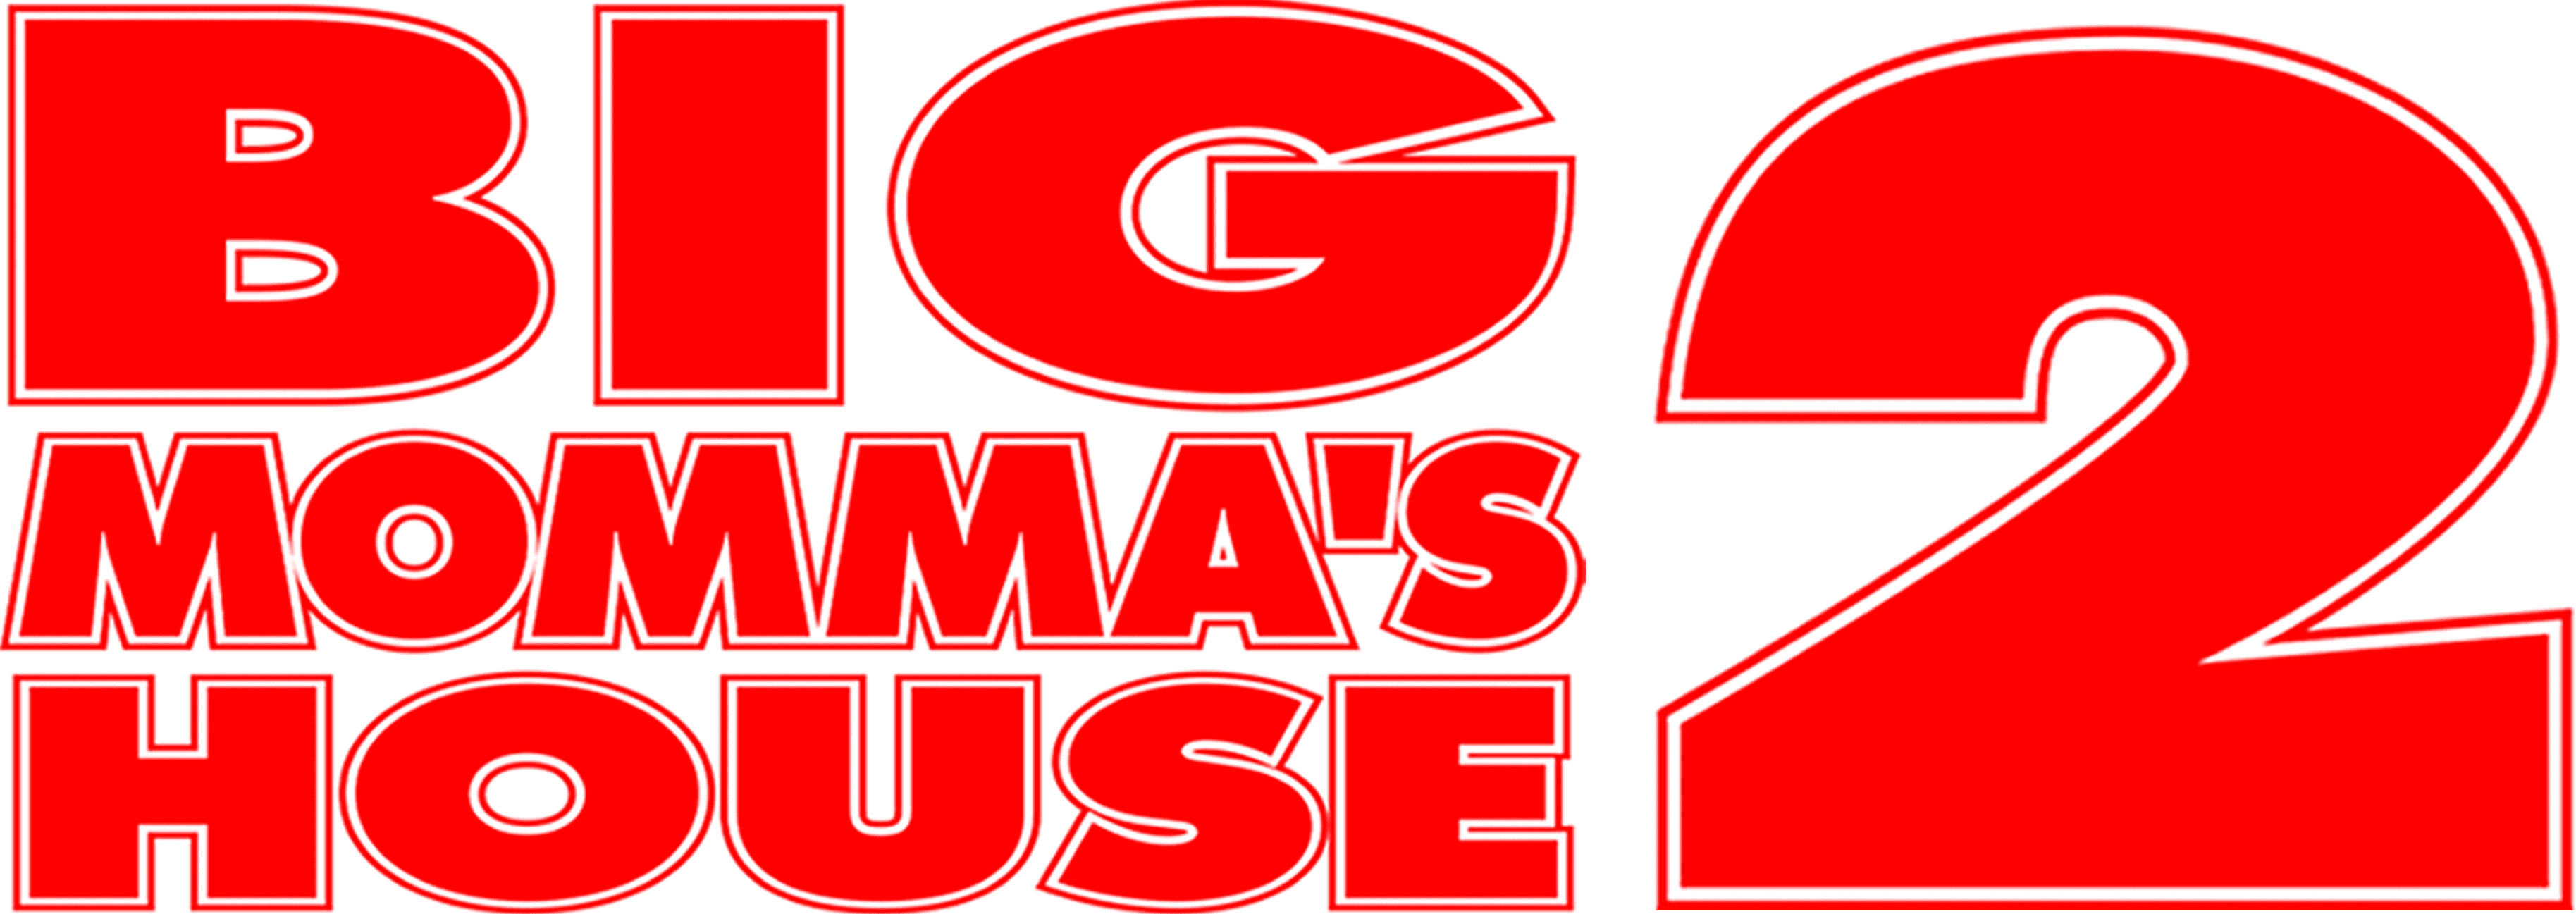 Big Momma's House 2 logo